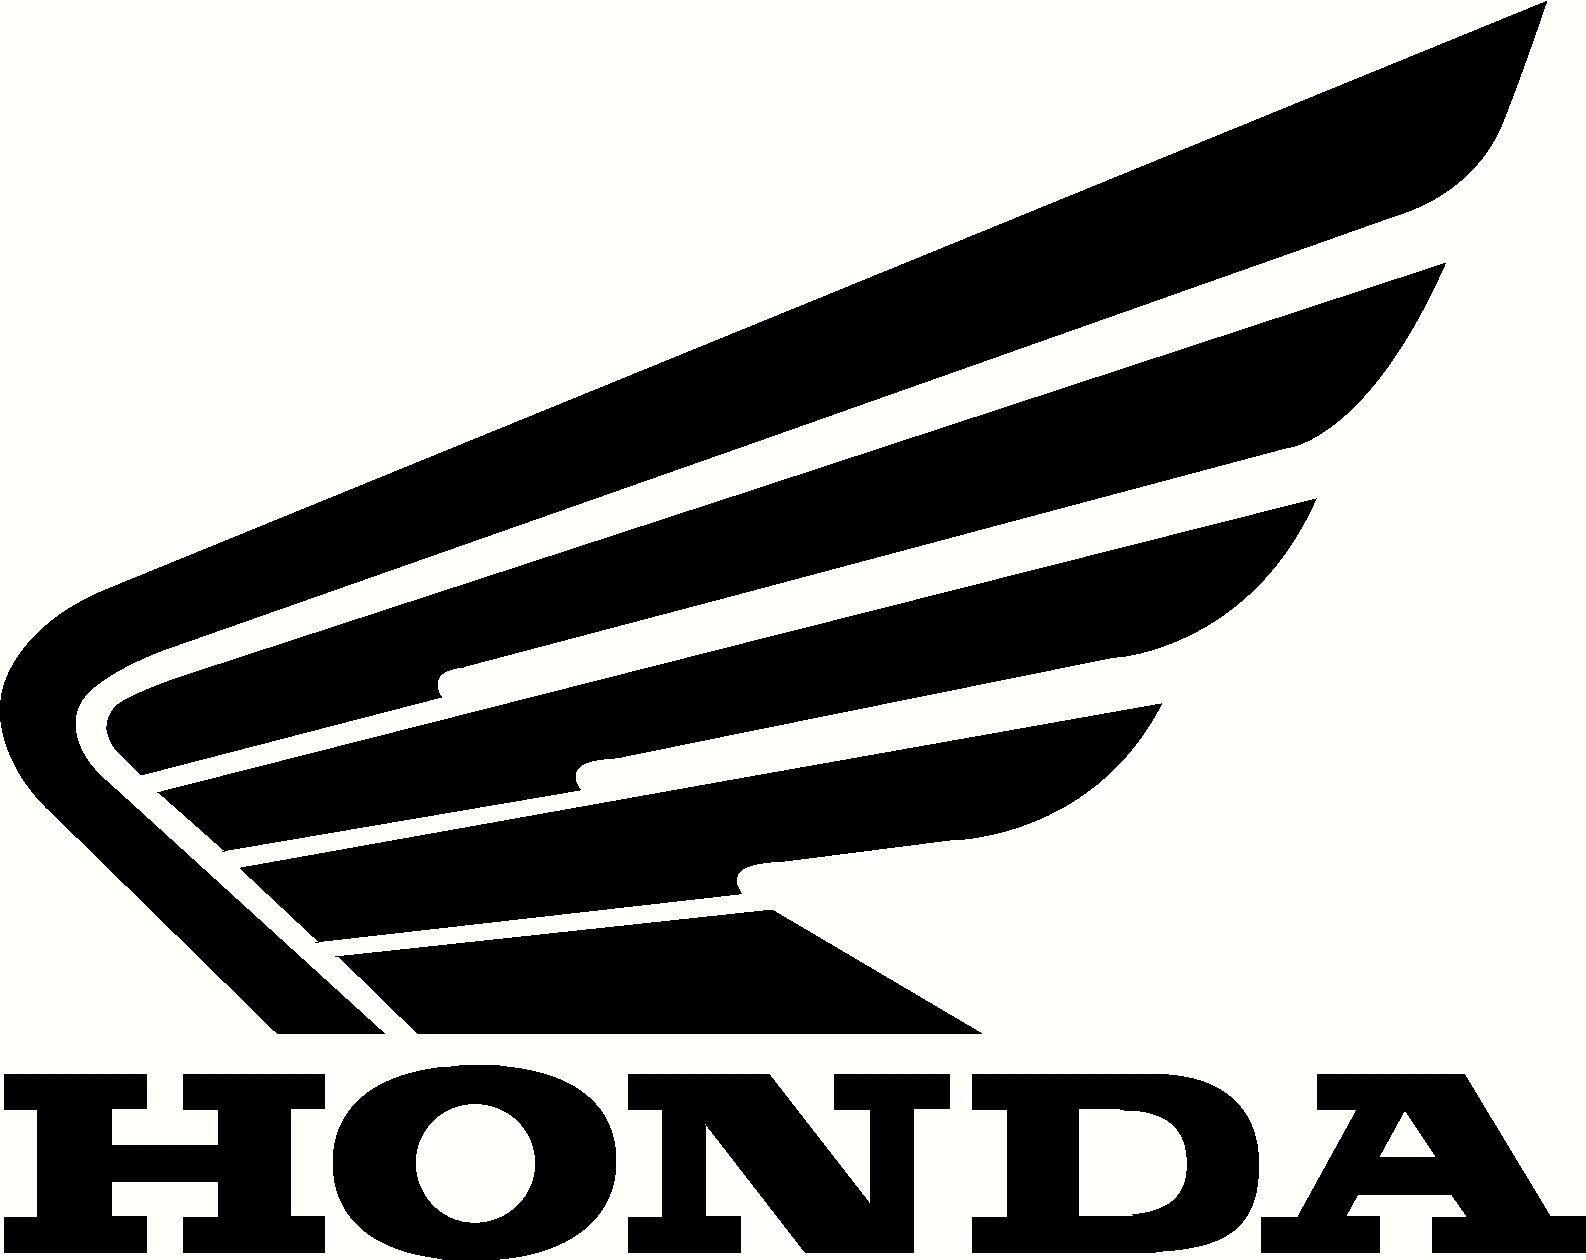 New Honda Motorcycle Logo - Pin by Ross Robinson on motorcycles logos | Pinterest | Motorcycle ...